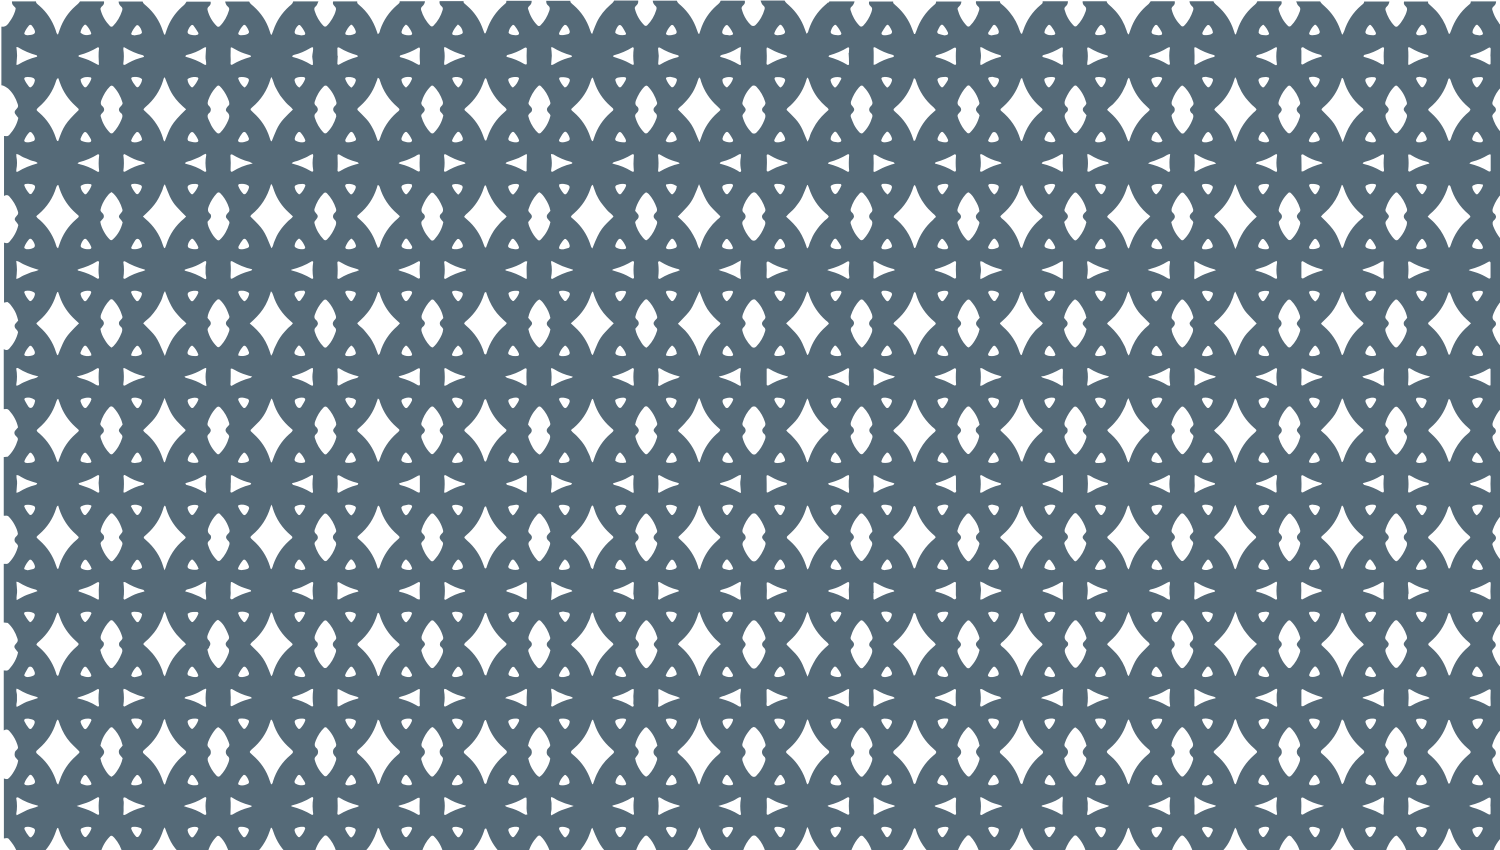 Parasoleil™ Eckleburg© pattern displayed with a blue color overlay